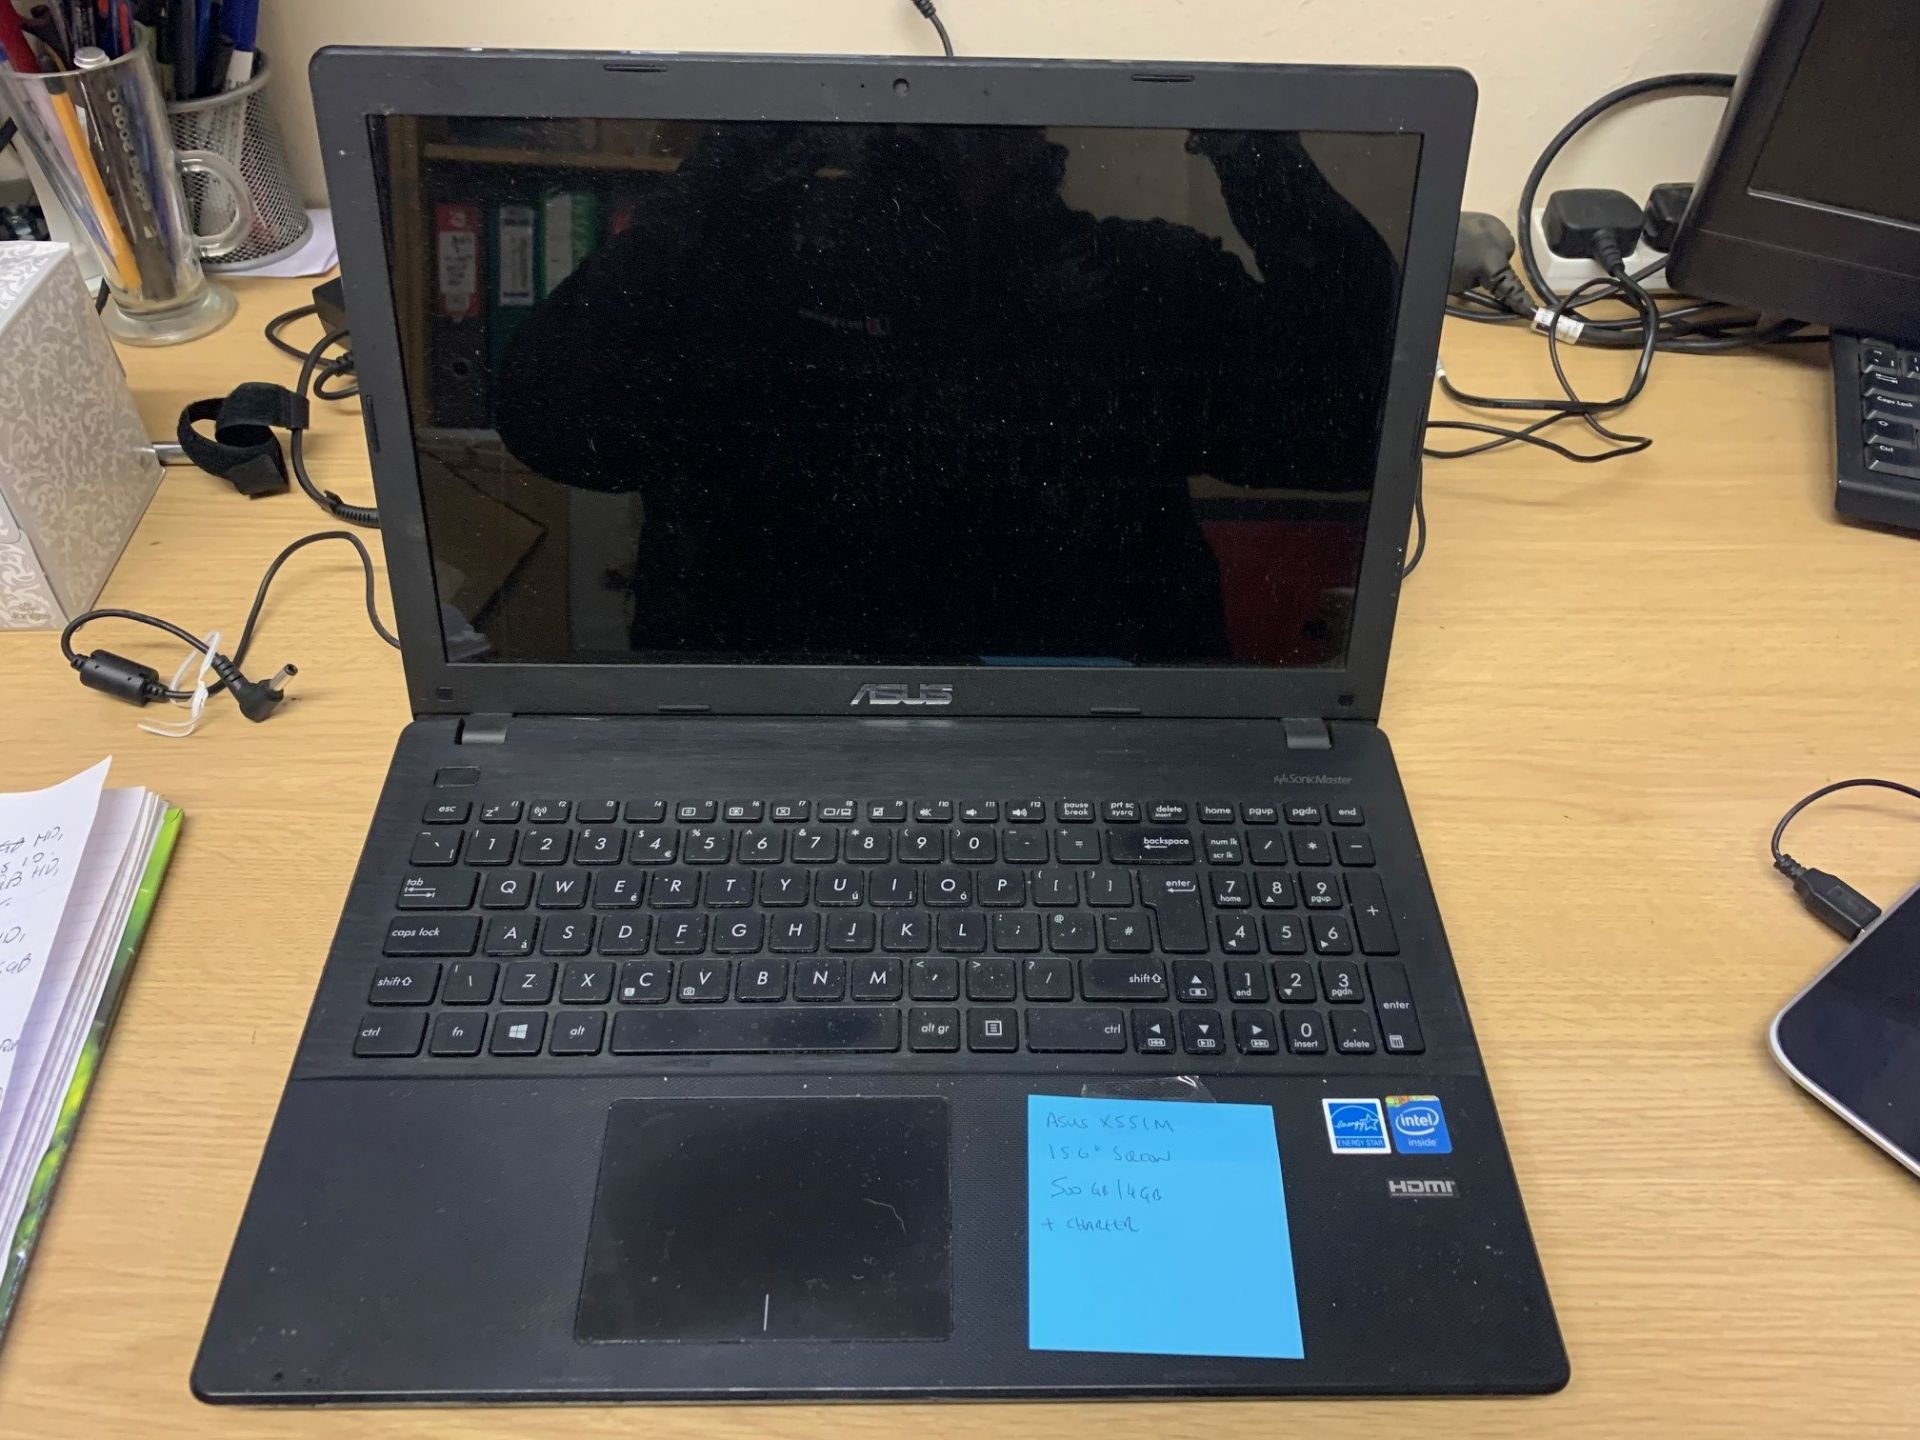 Asus X551M Laptop - 500GB Hard Drive, 4GB RAM, 15.6" Screen, Windows 10 & Charger - Image 2 of 4